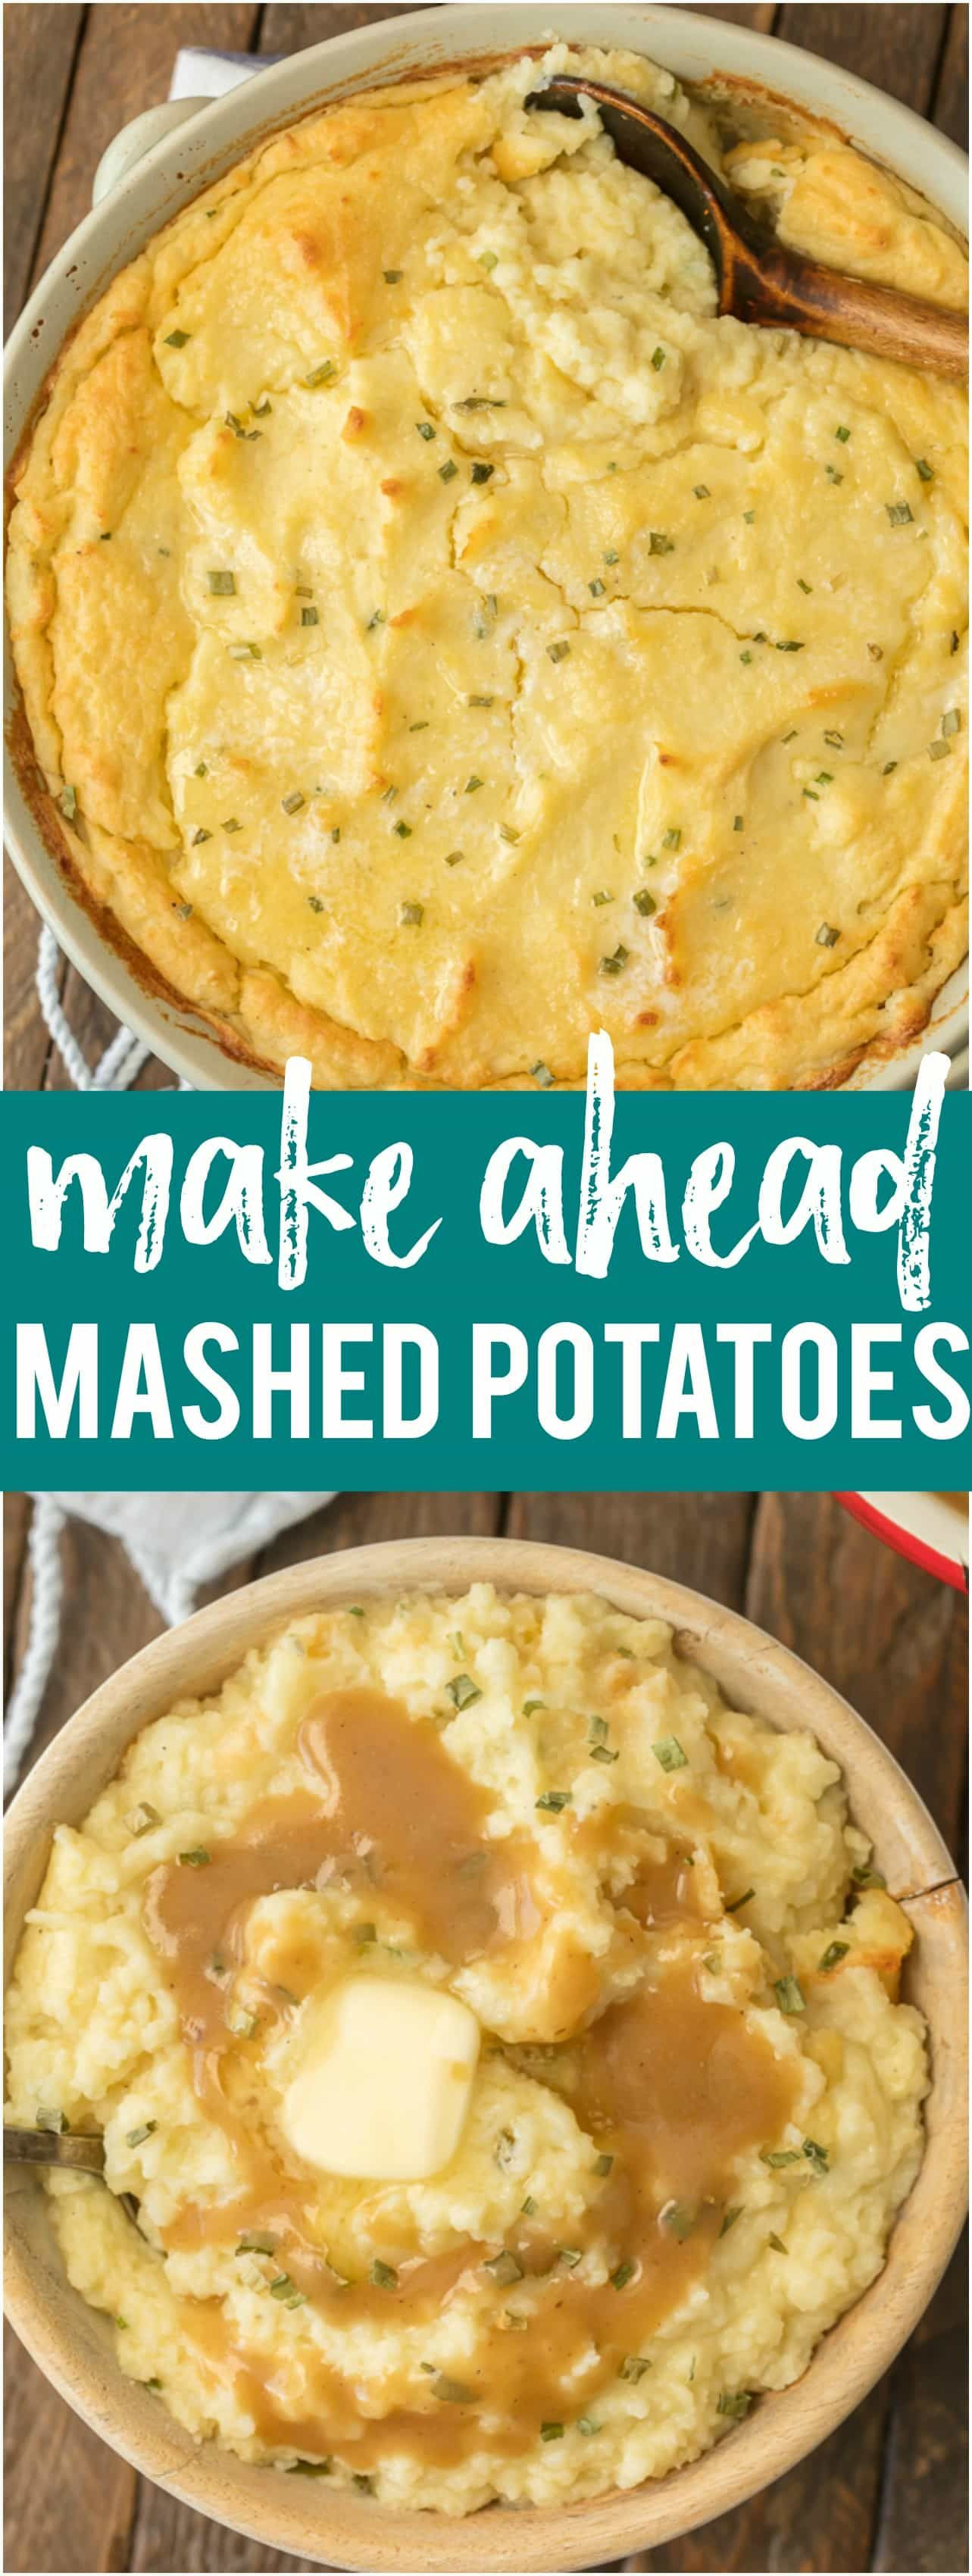 Pioneer Woman Thanksgiving Mashed Potatoes
 Make Ahead Mashed Potatoes Recipe